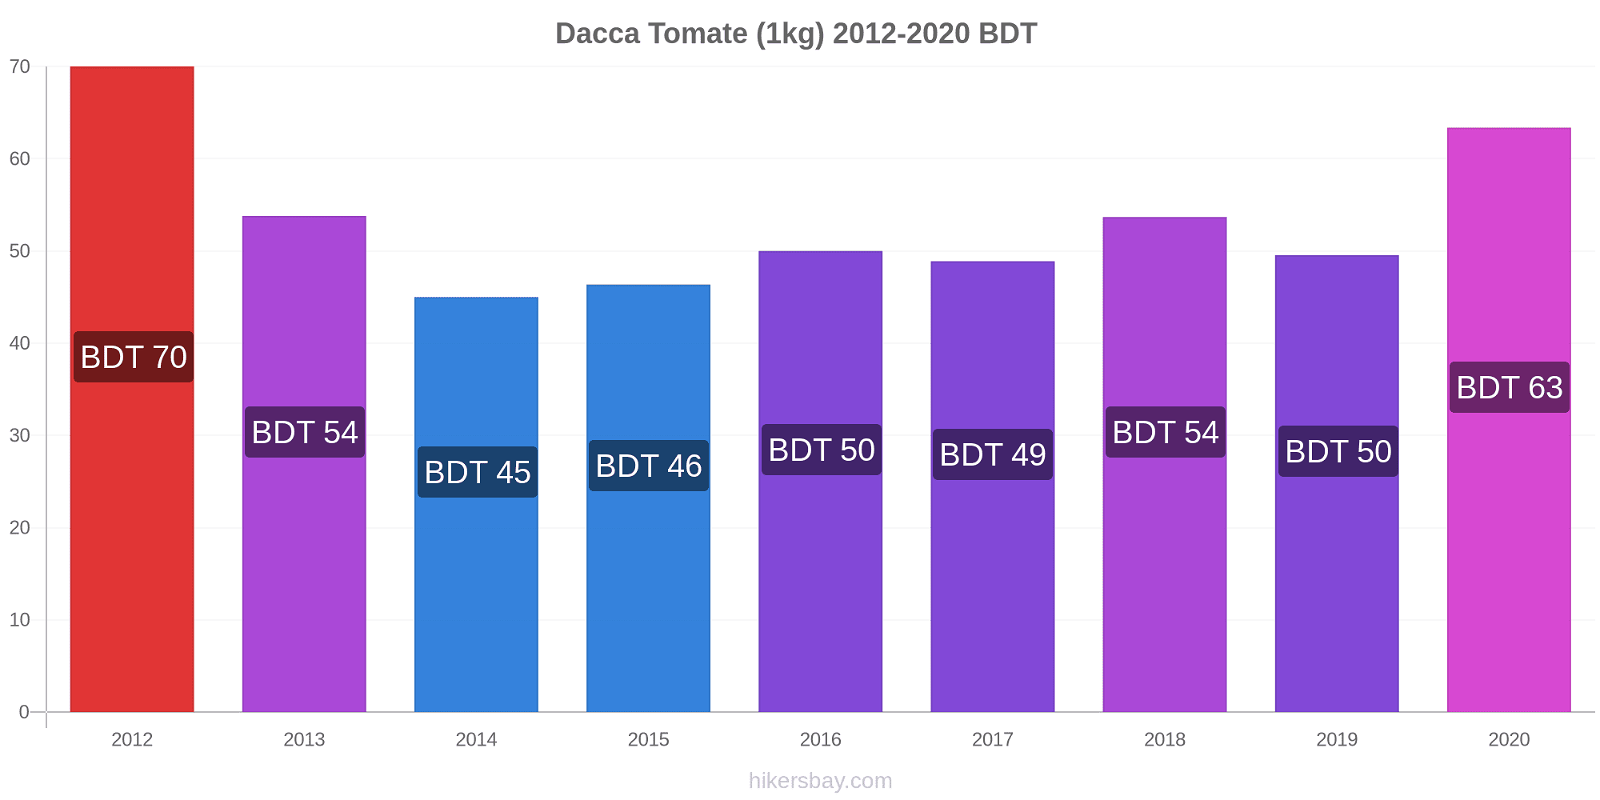 Dacca changements de prix Tomate (1kg) hikersbay.com